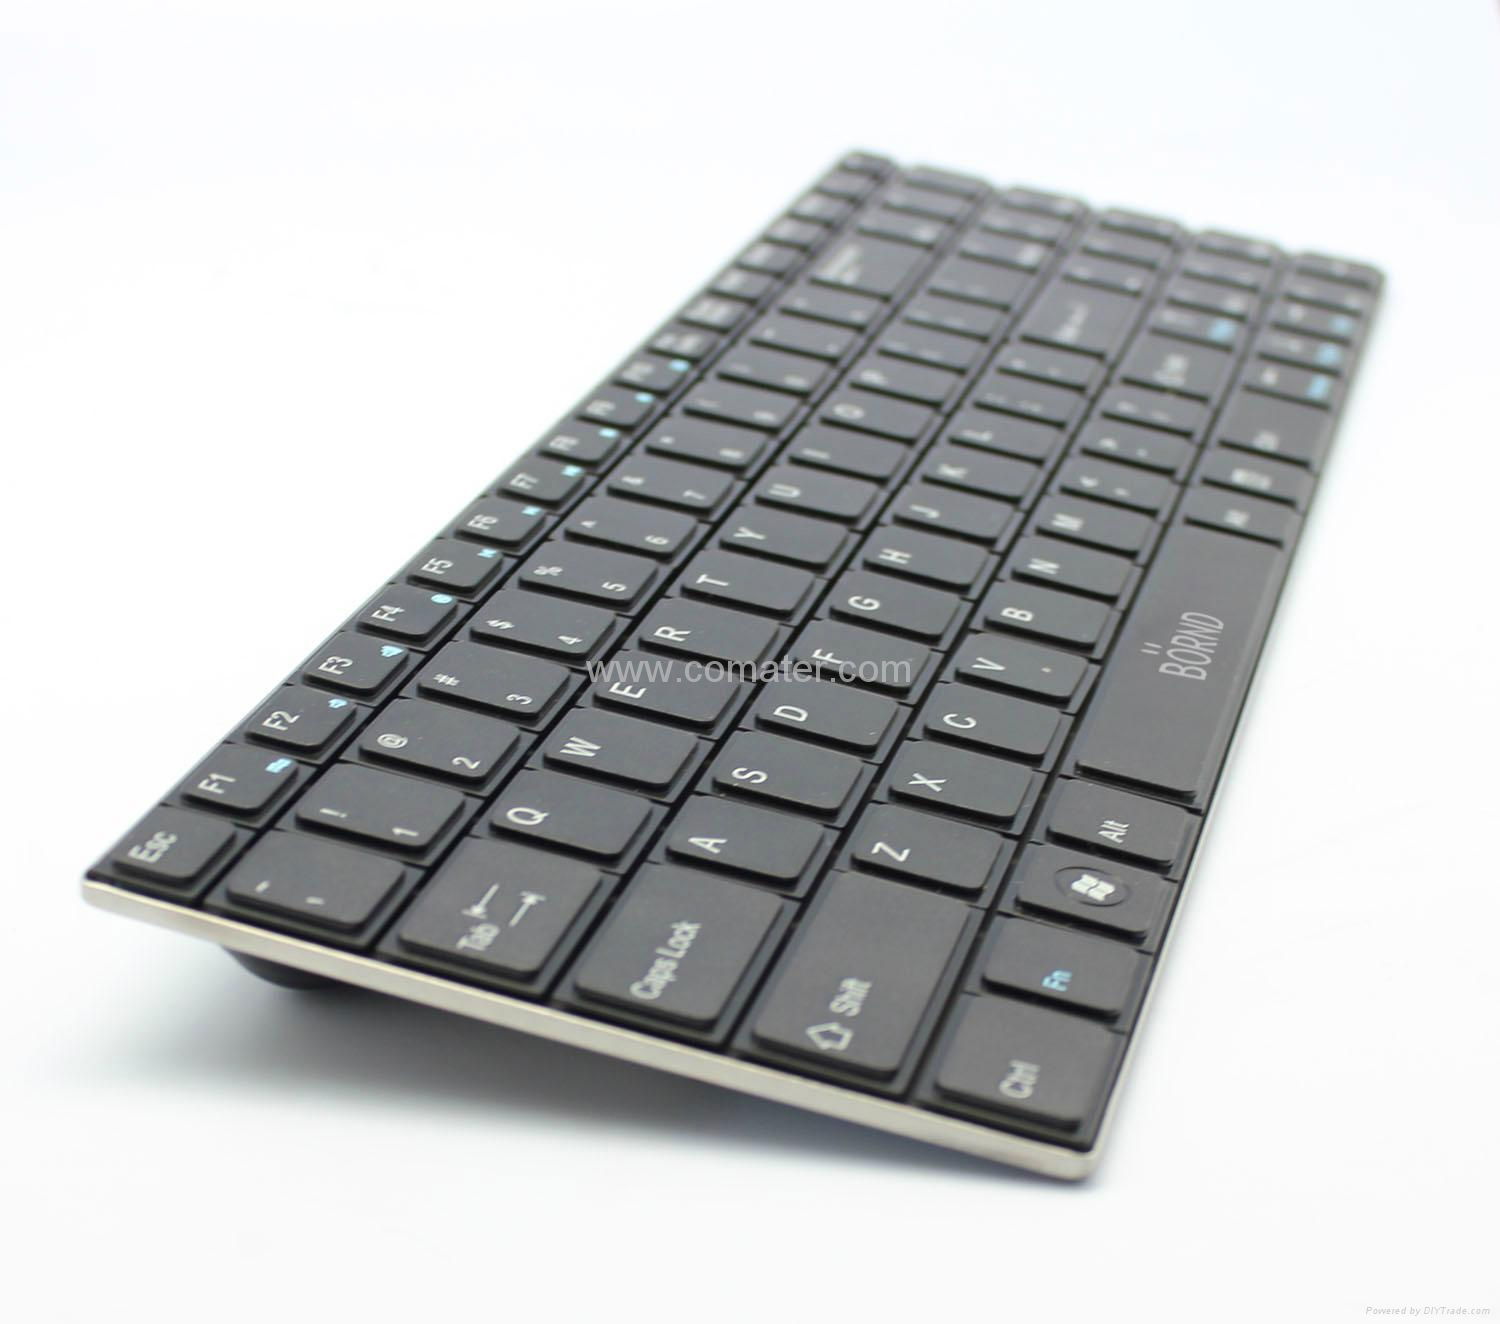 K208G Untra-thin 2.4GHz Bluetooth wireless keyboard with metallic finish